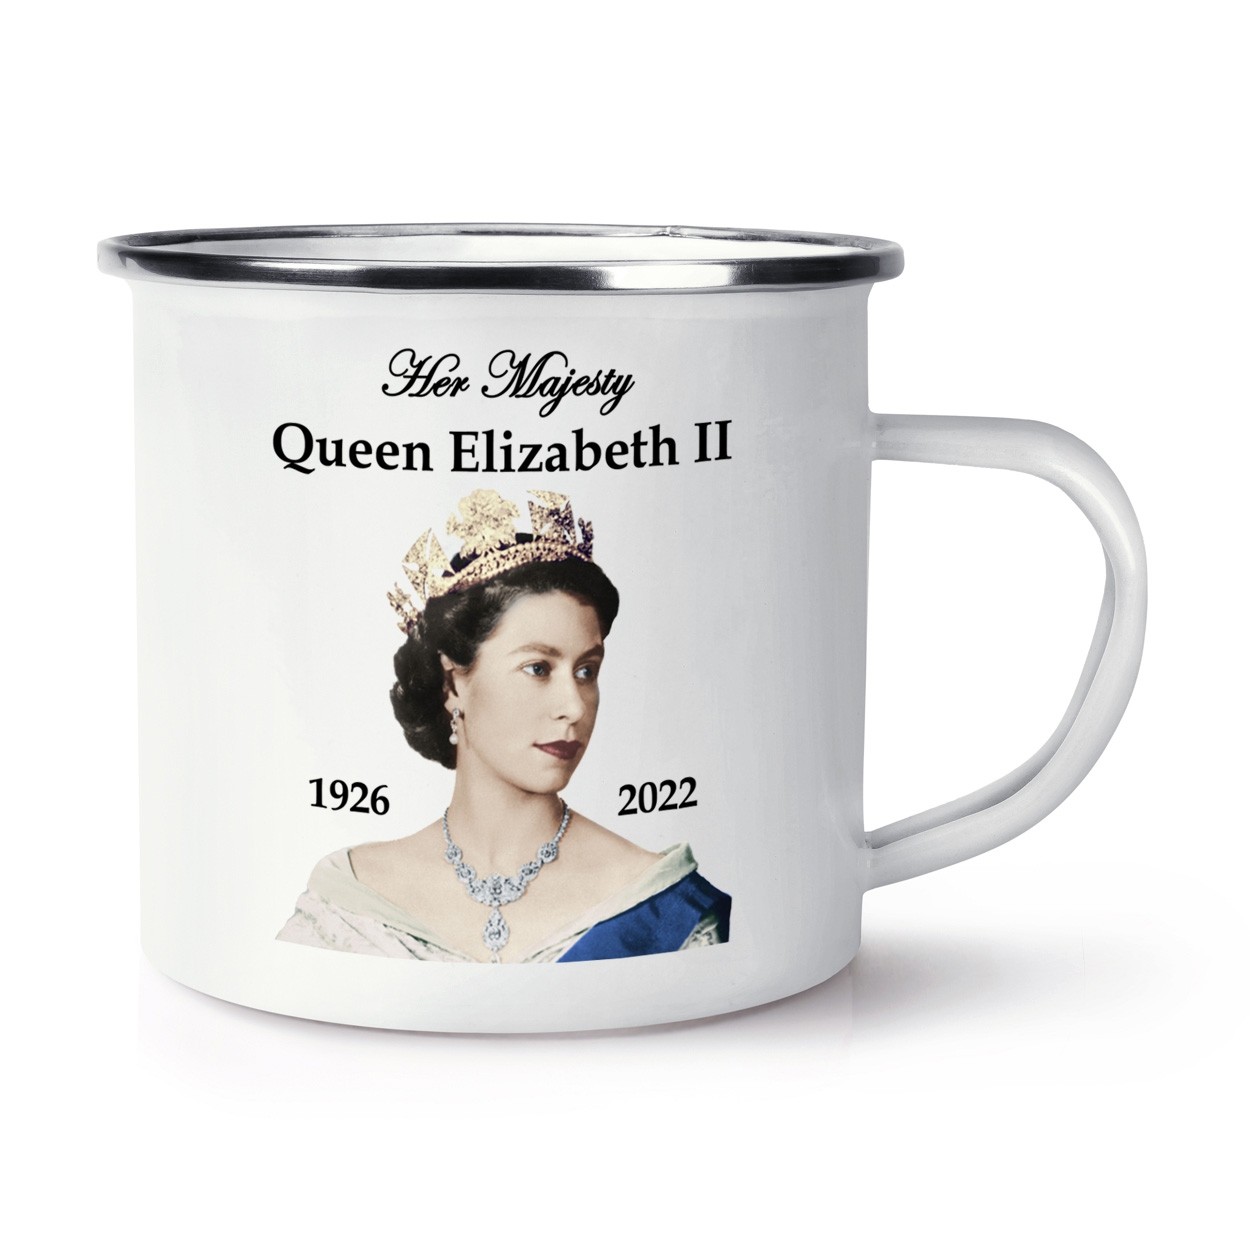 Her Majesty Queen Elizabeth II 1926 - 2022 Enamel Mug Cup Commemorative Gift